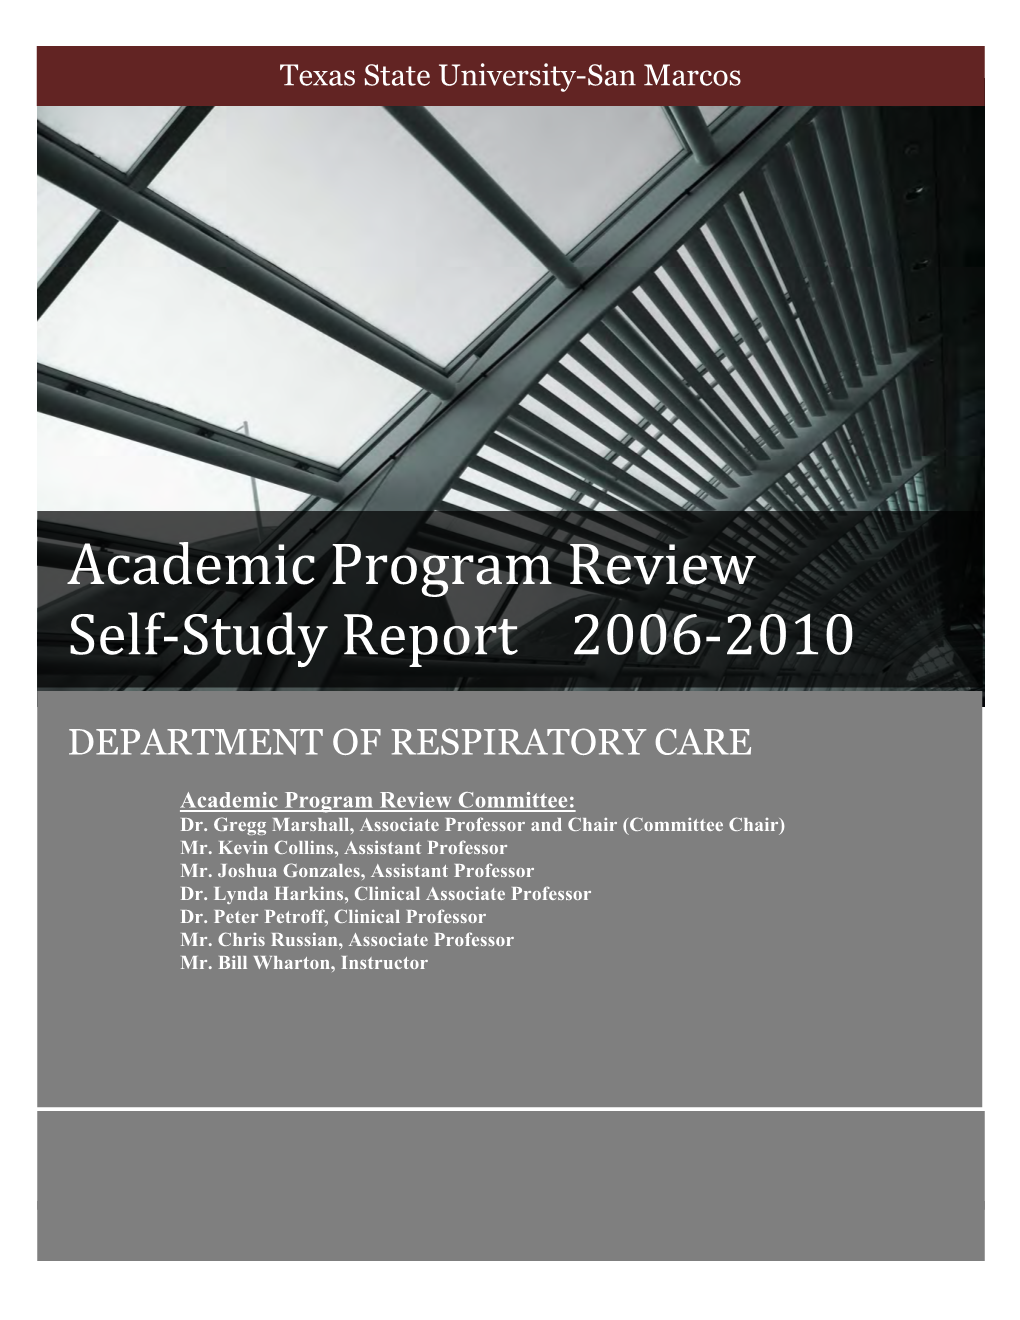 Academic Program Review Self-Study Report 2006-2010